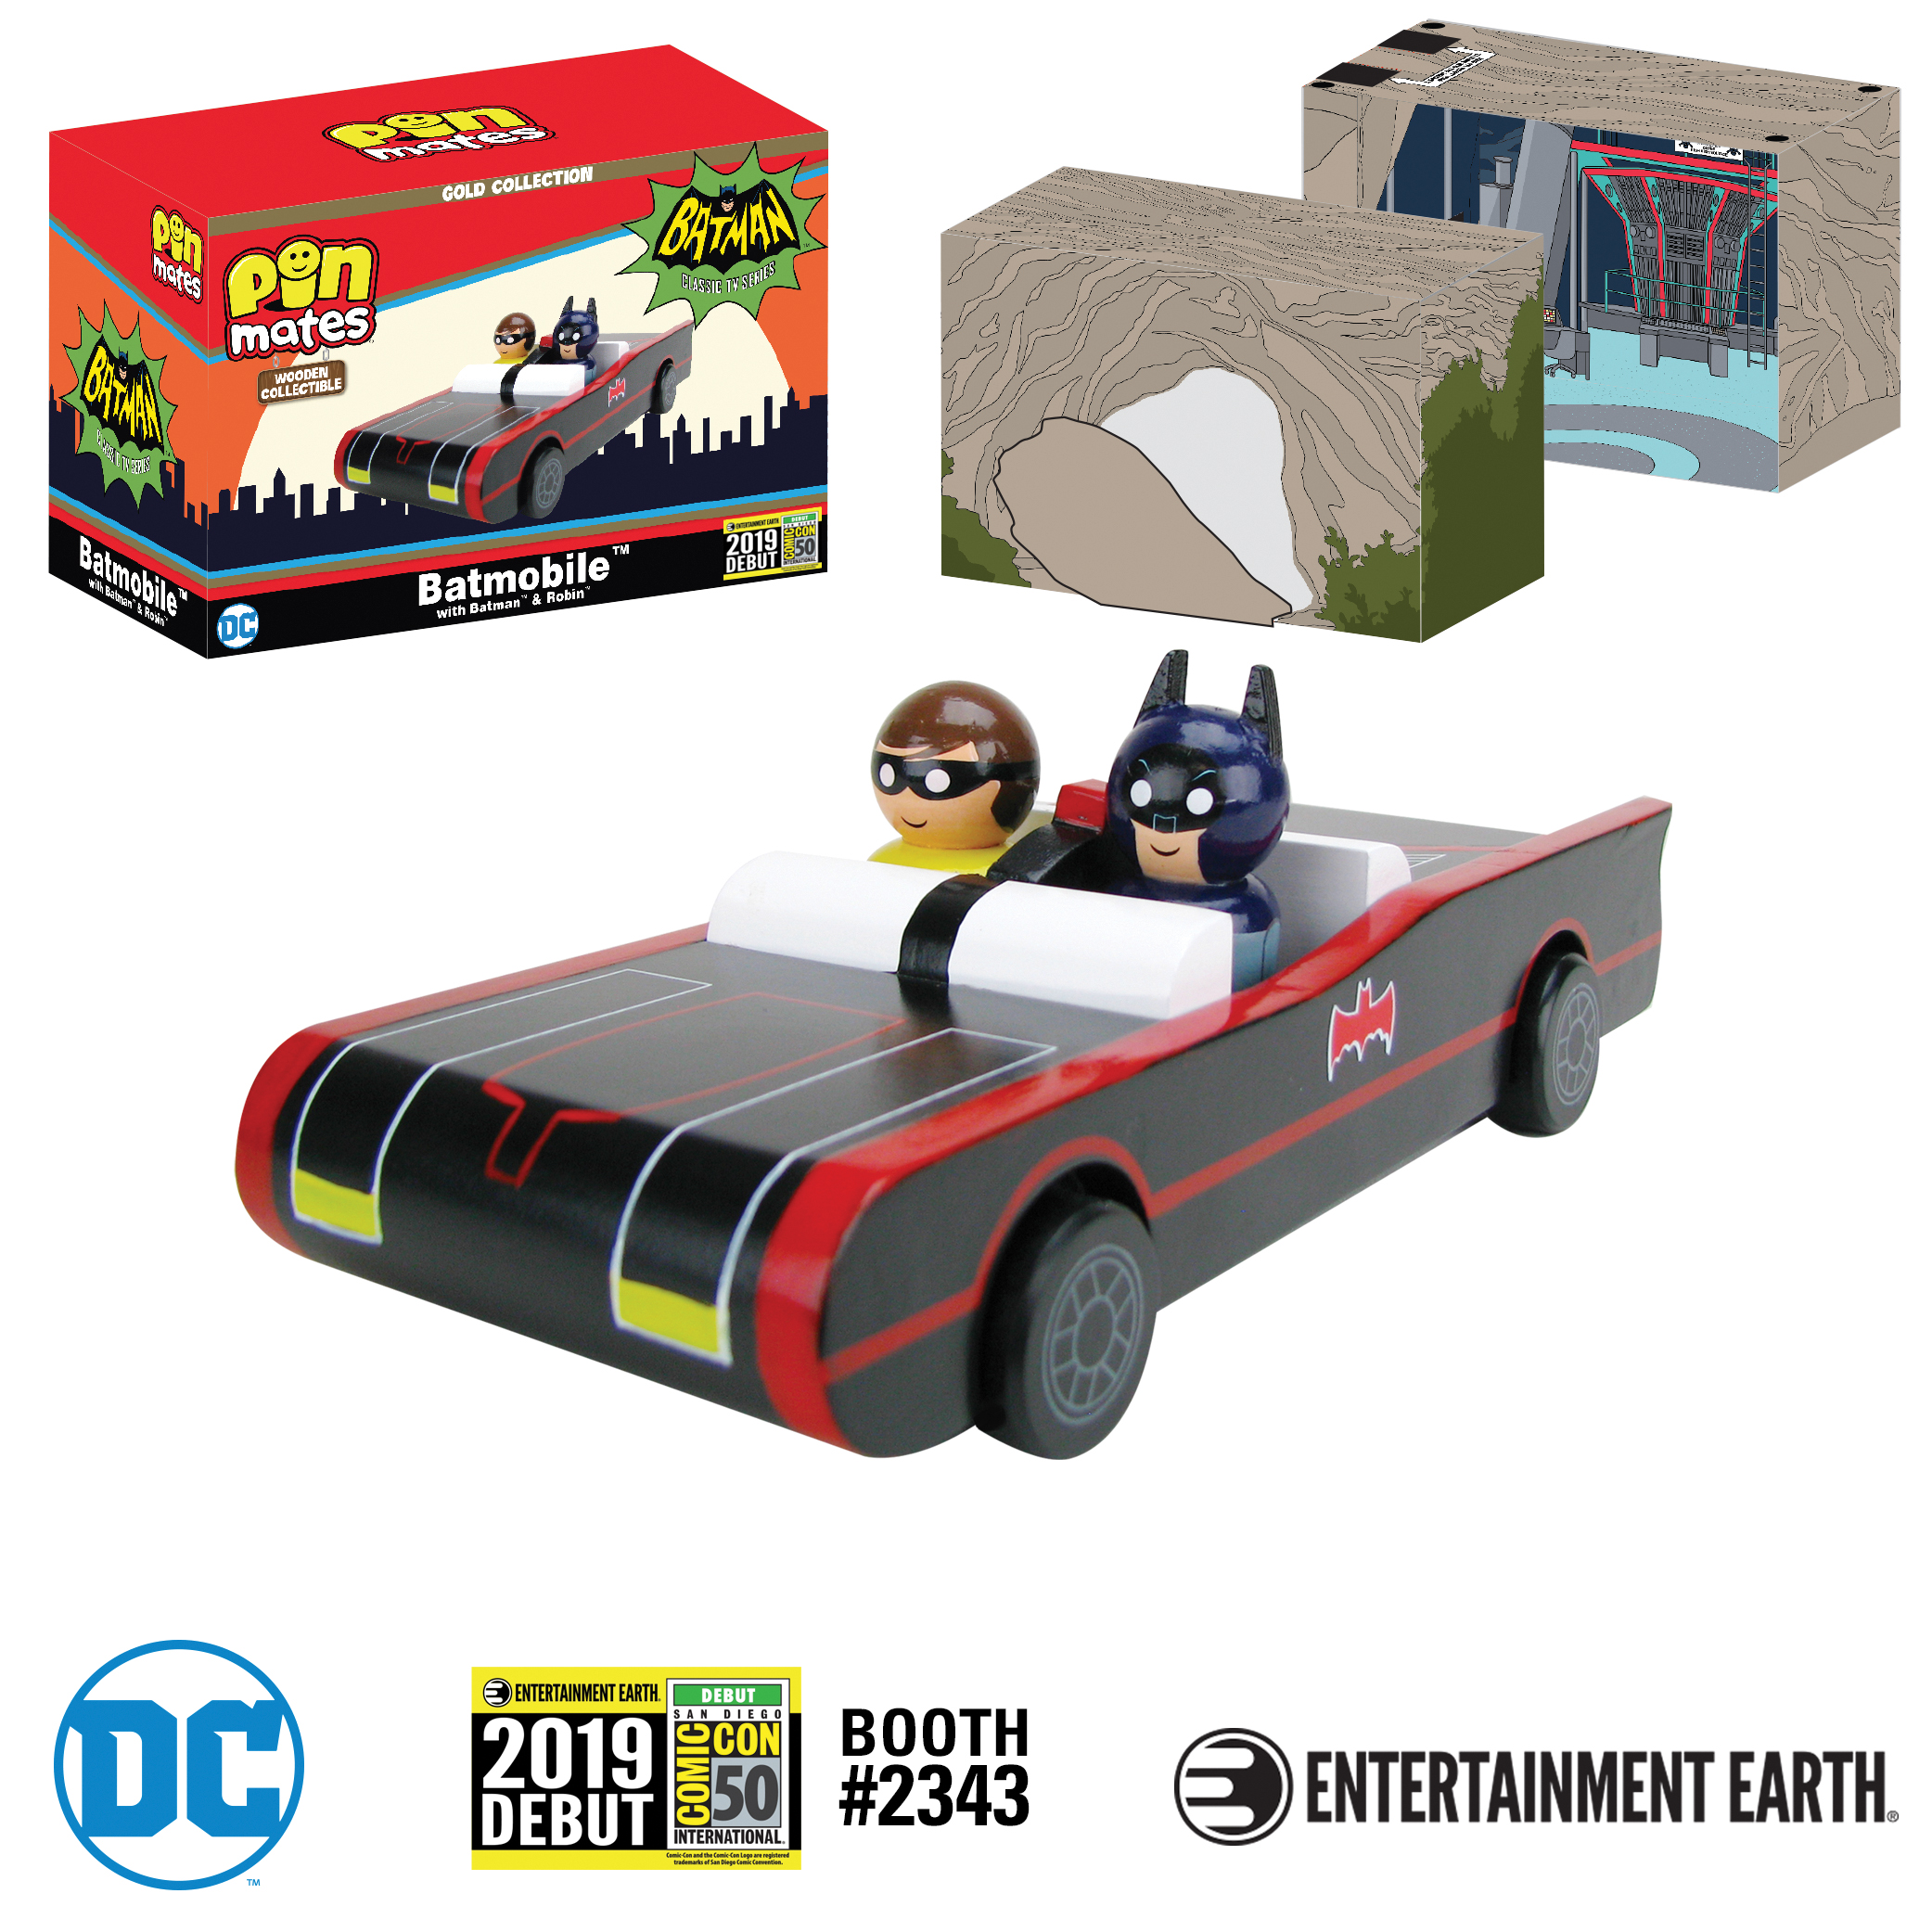 Batman, Robin, Batmobile and Batcave